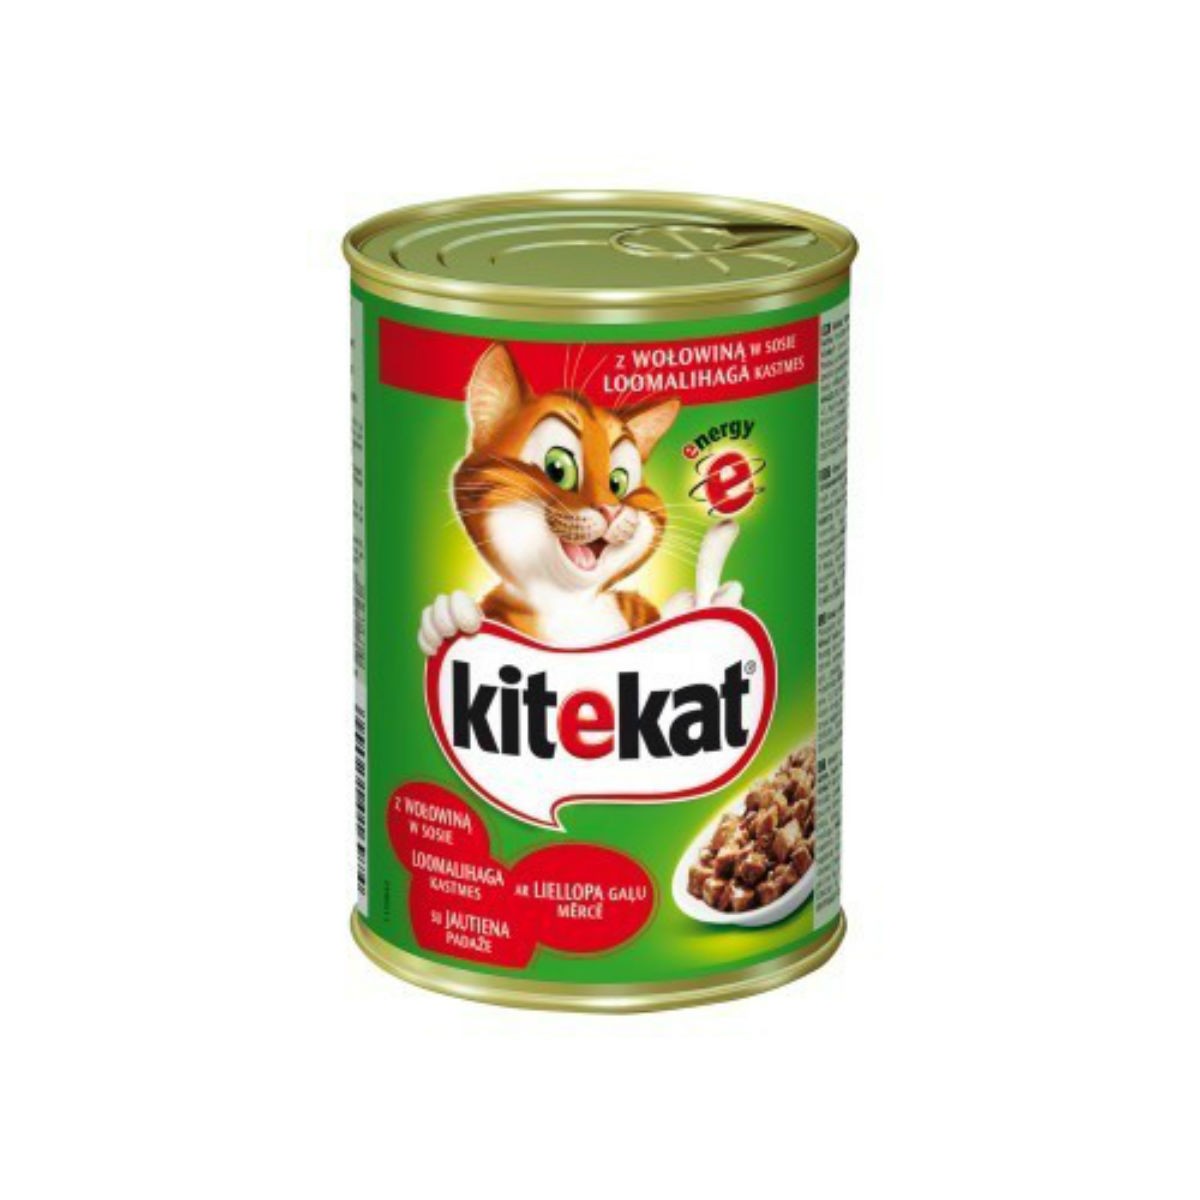 Kitekat canned beef 400g